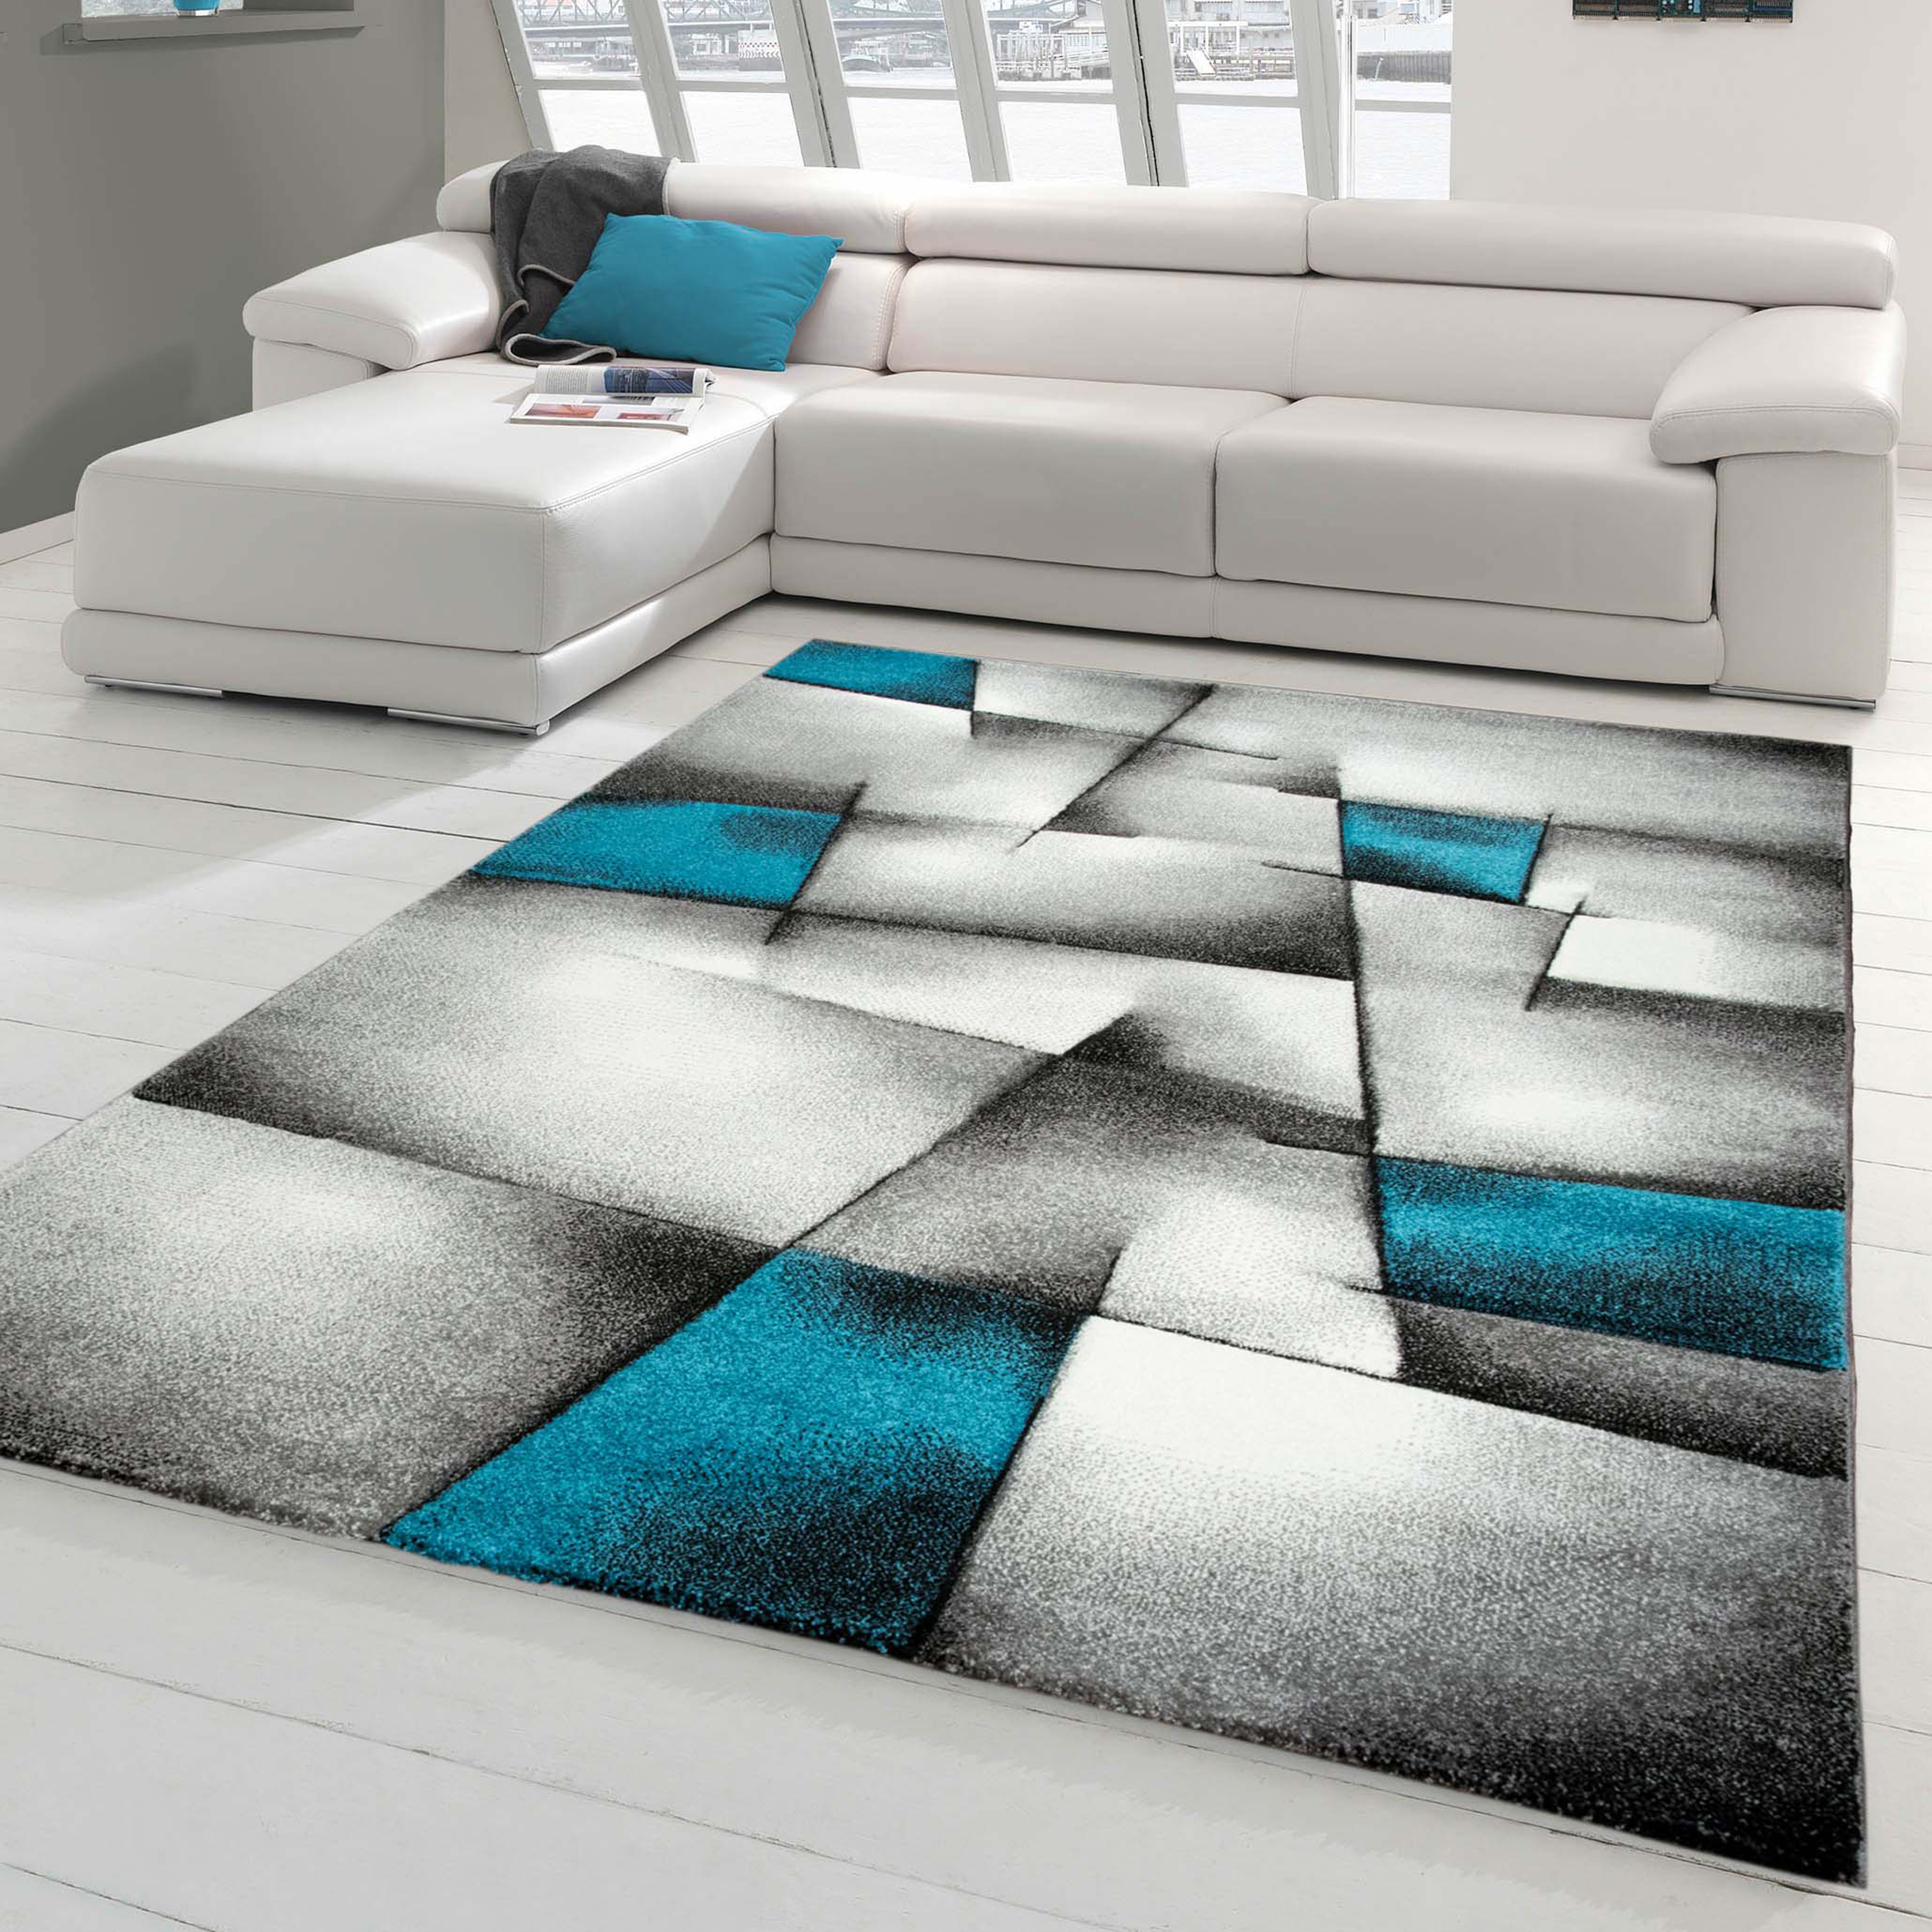 carpets: -Traum at and - High-quality Modern cheap designer Teppich carpet & dreams